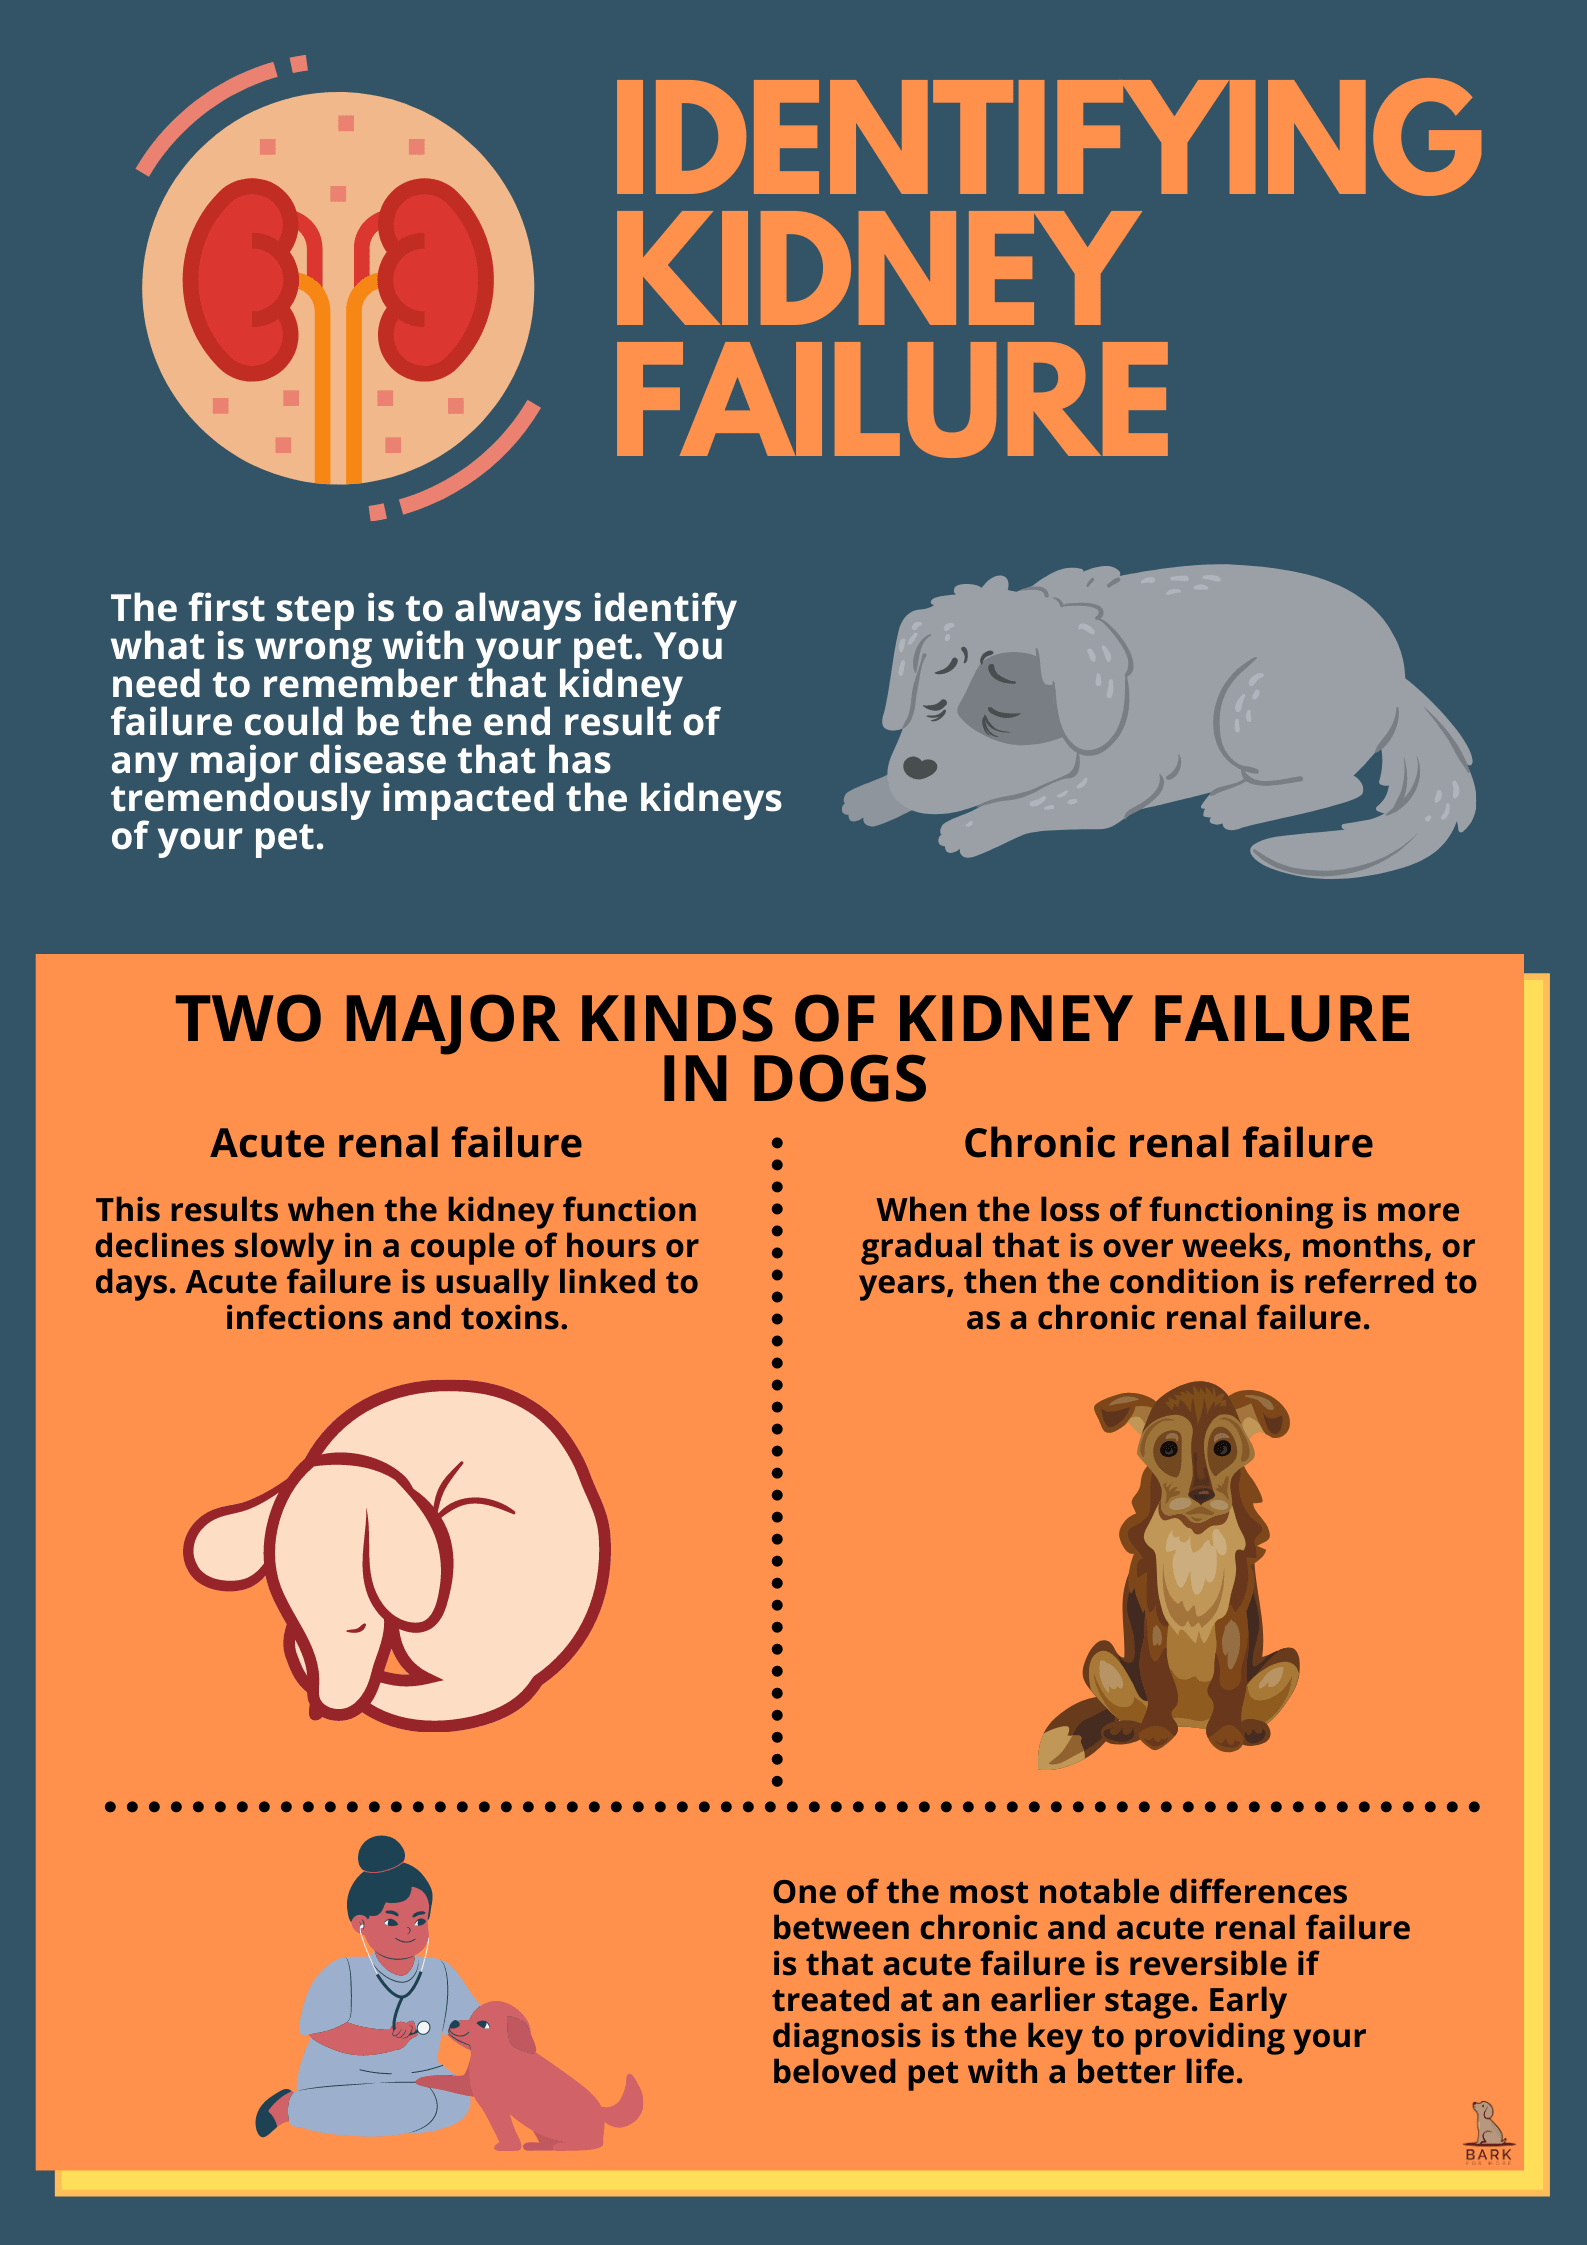 Identifying kidney failure